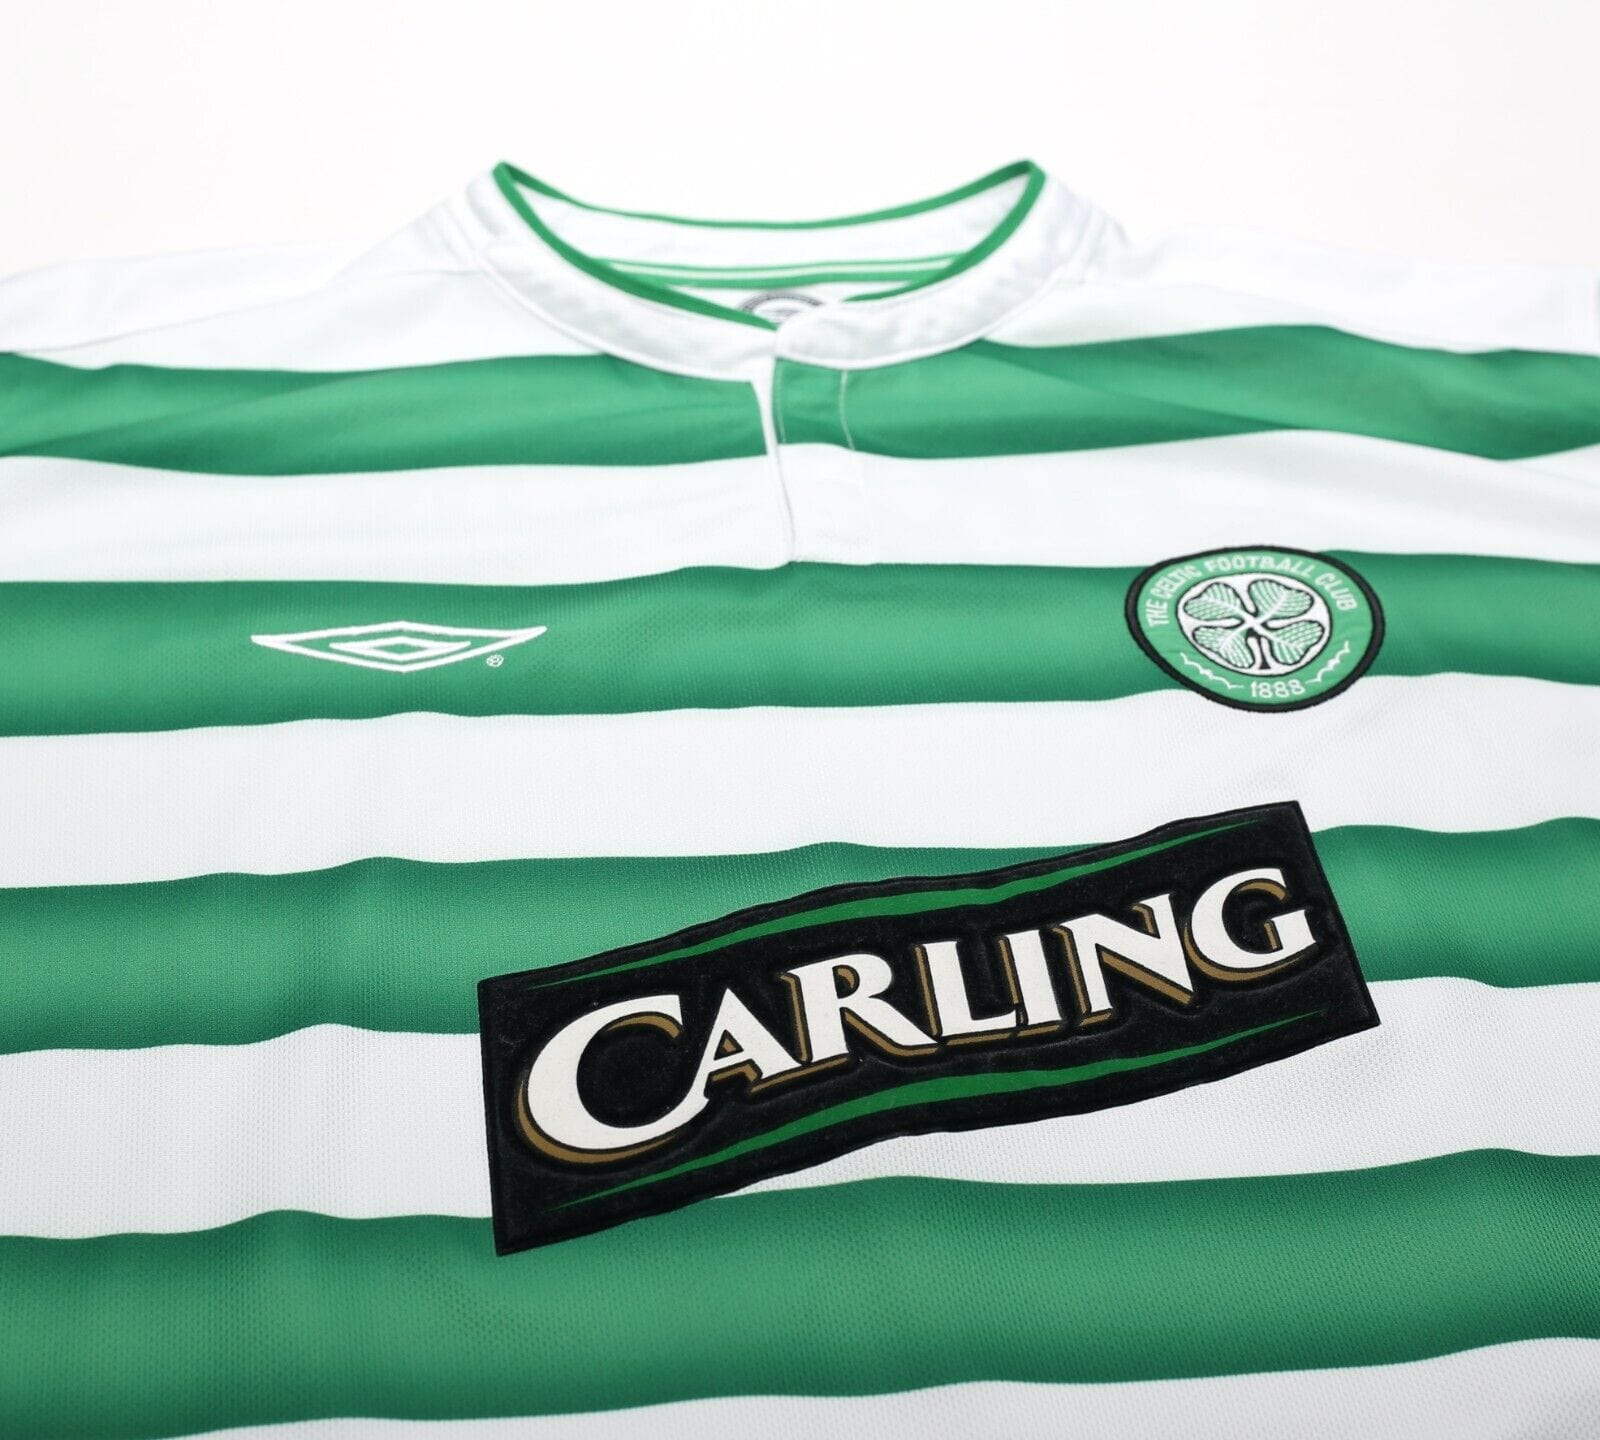 2003/04 LARSSON #7 Celtic Vintage Umbro European Home Football Shirt (XL) Sweden